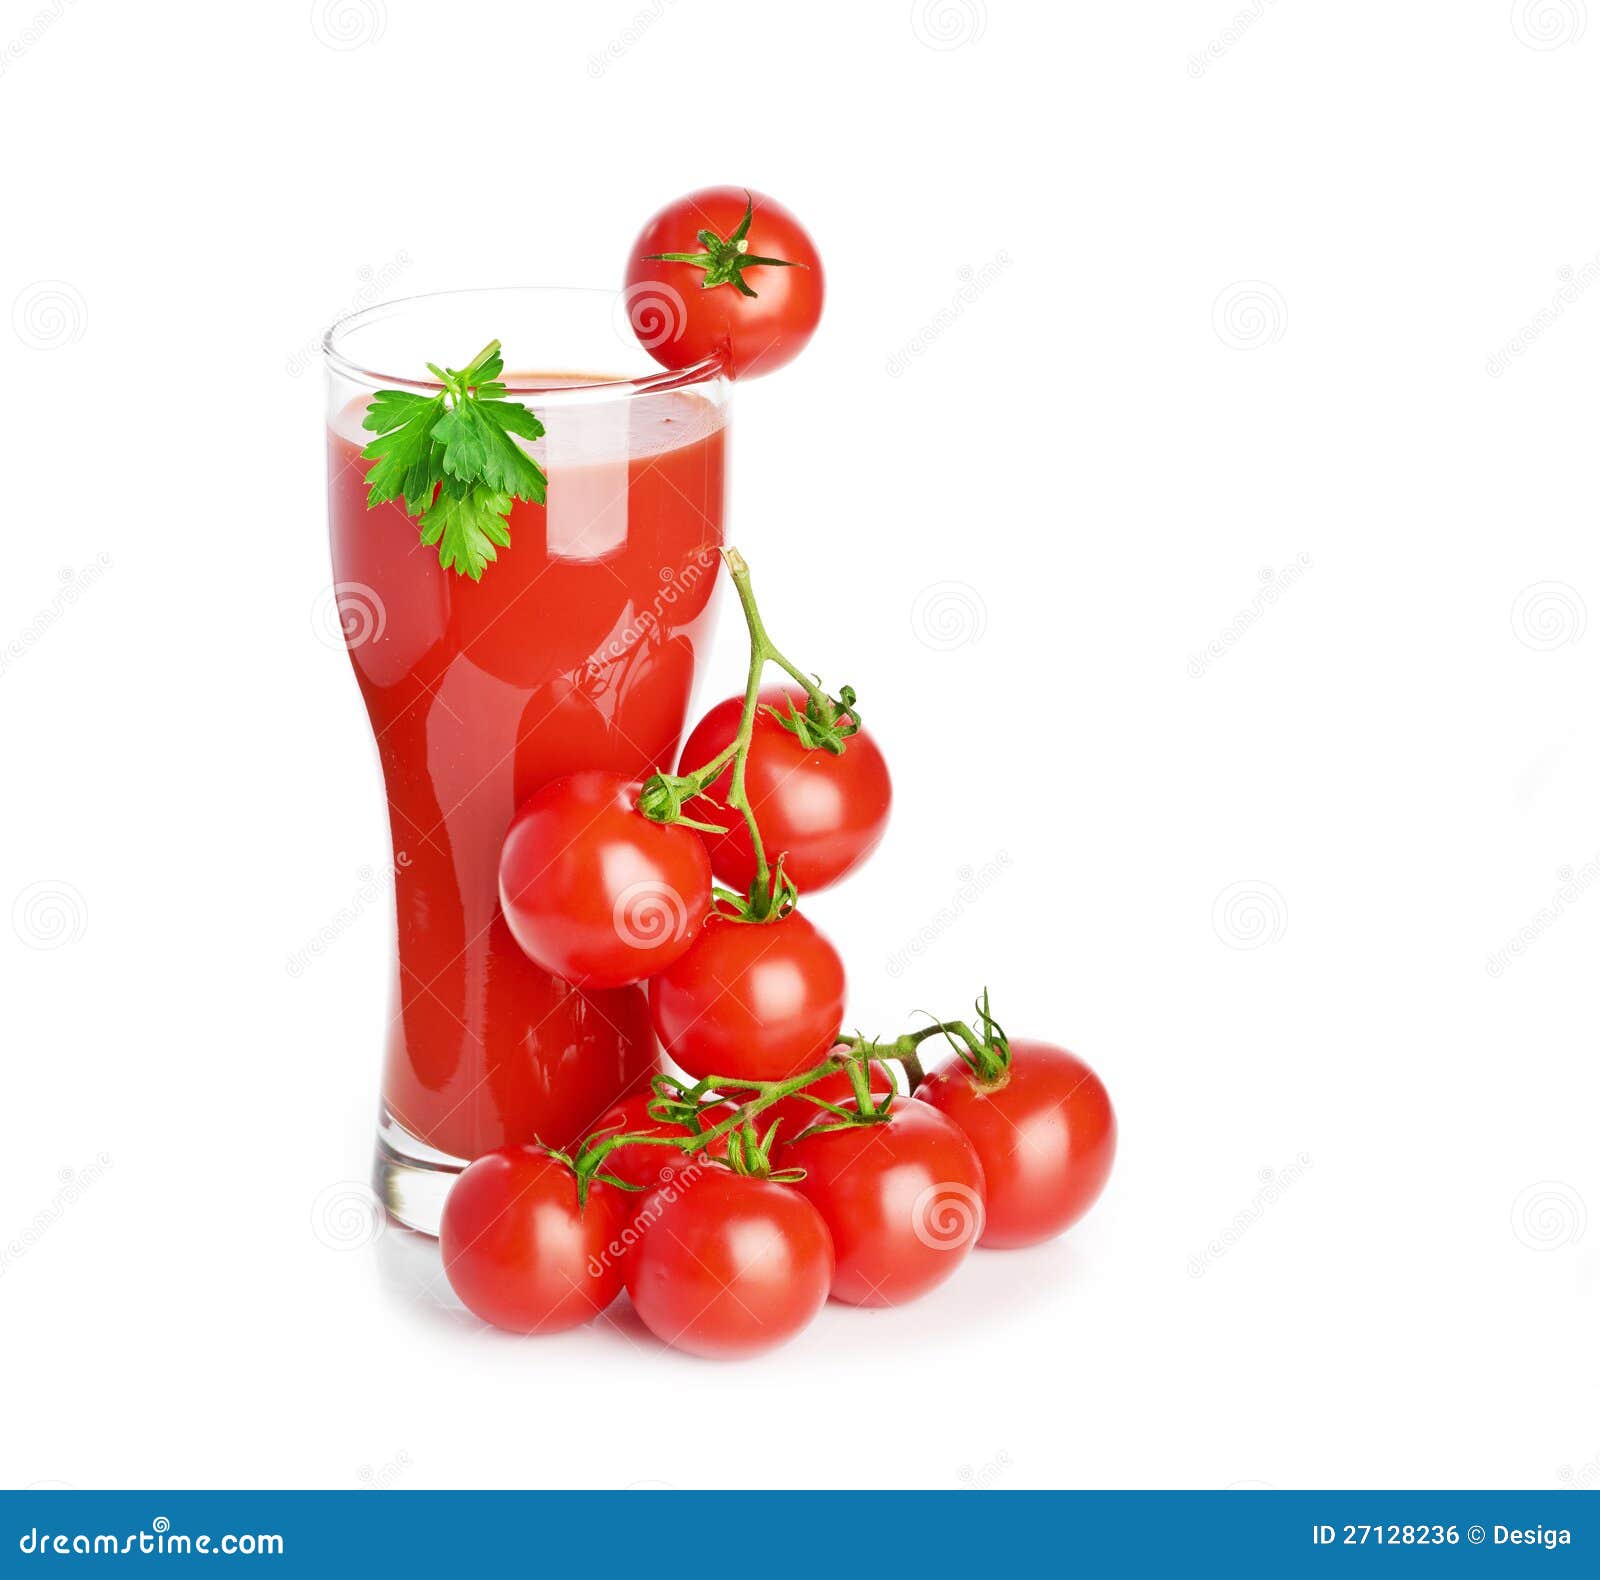 tomato juice clipart - photo #18